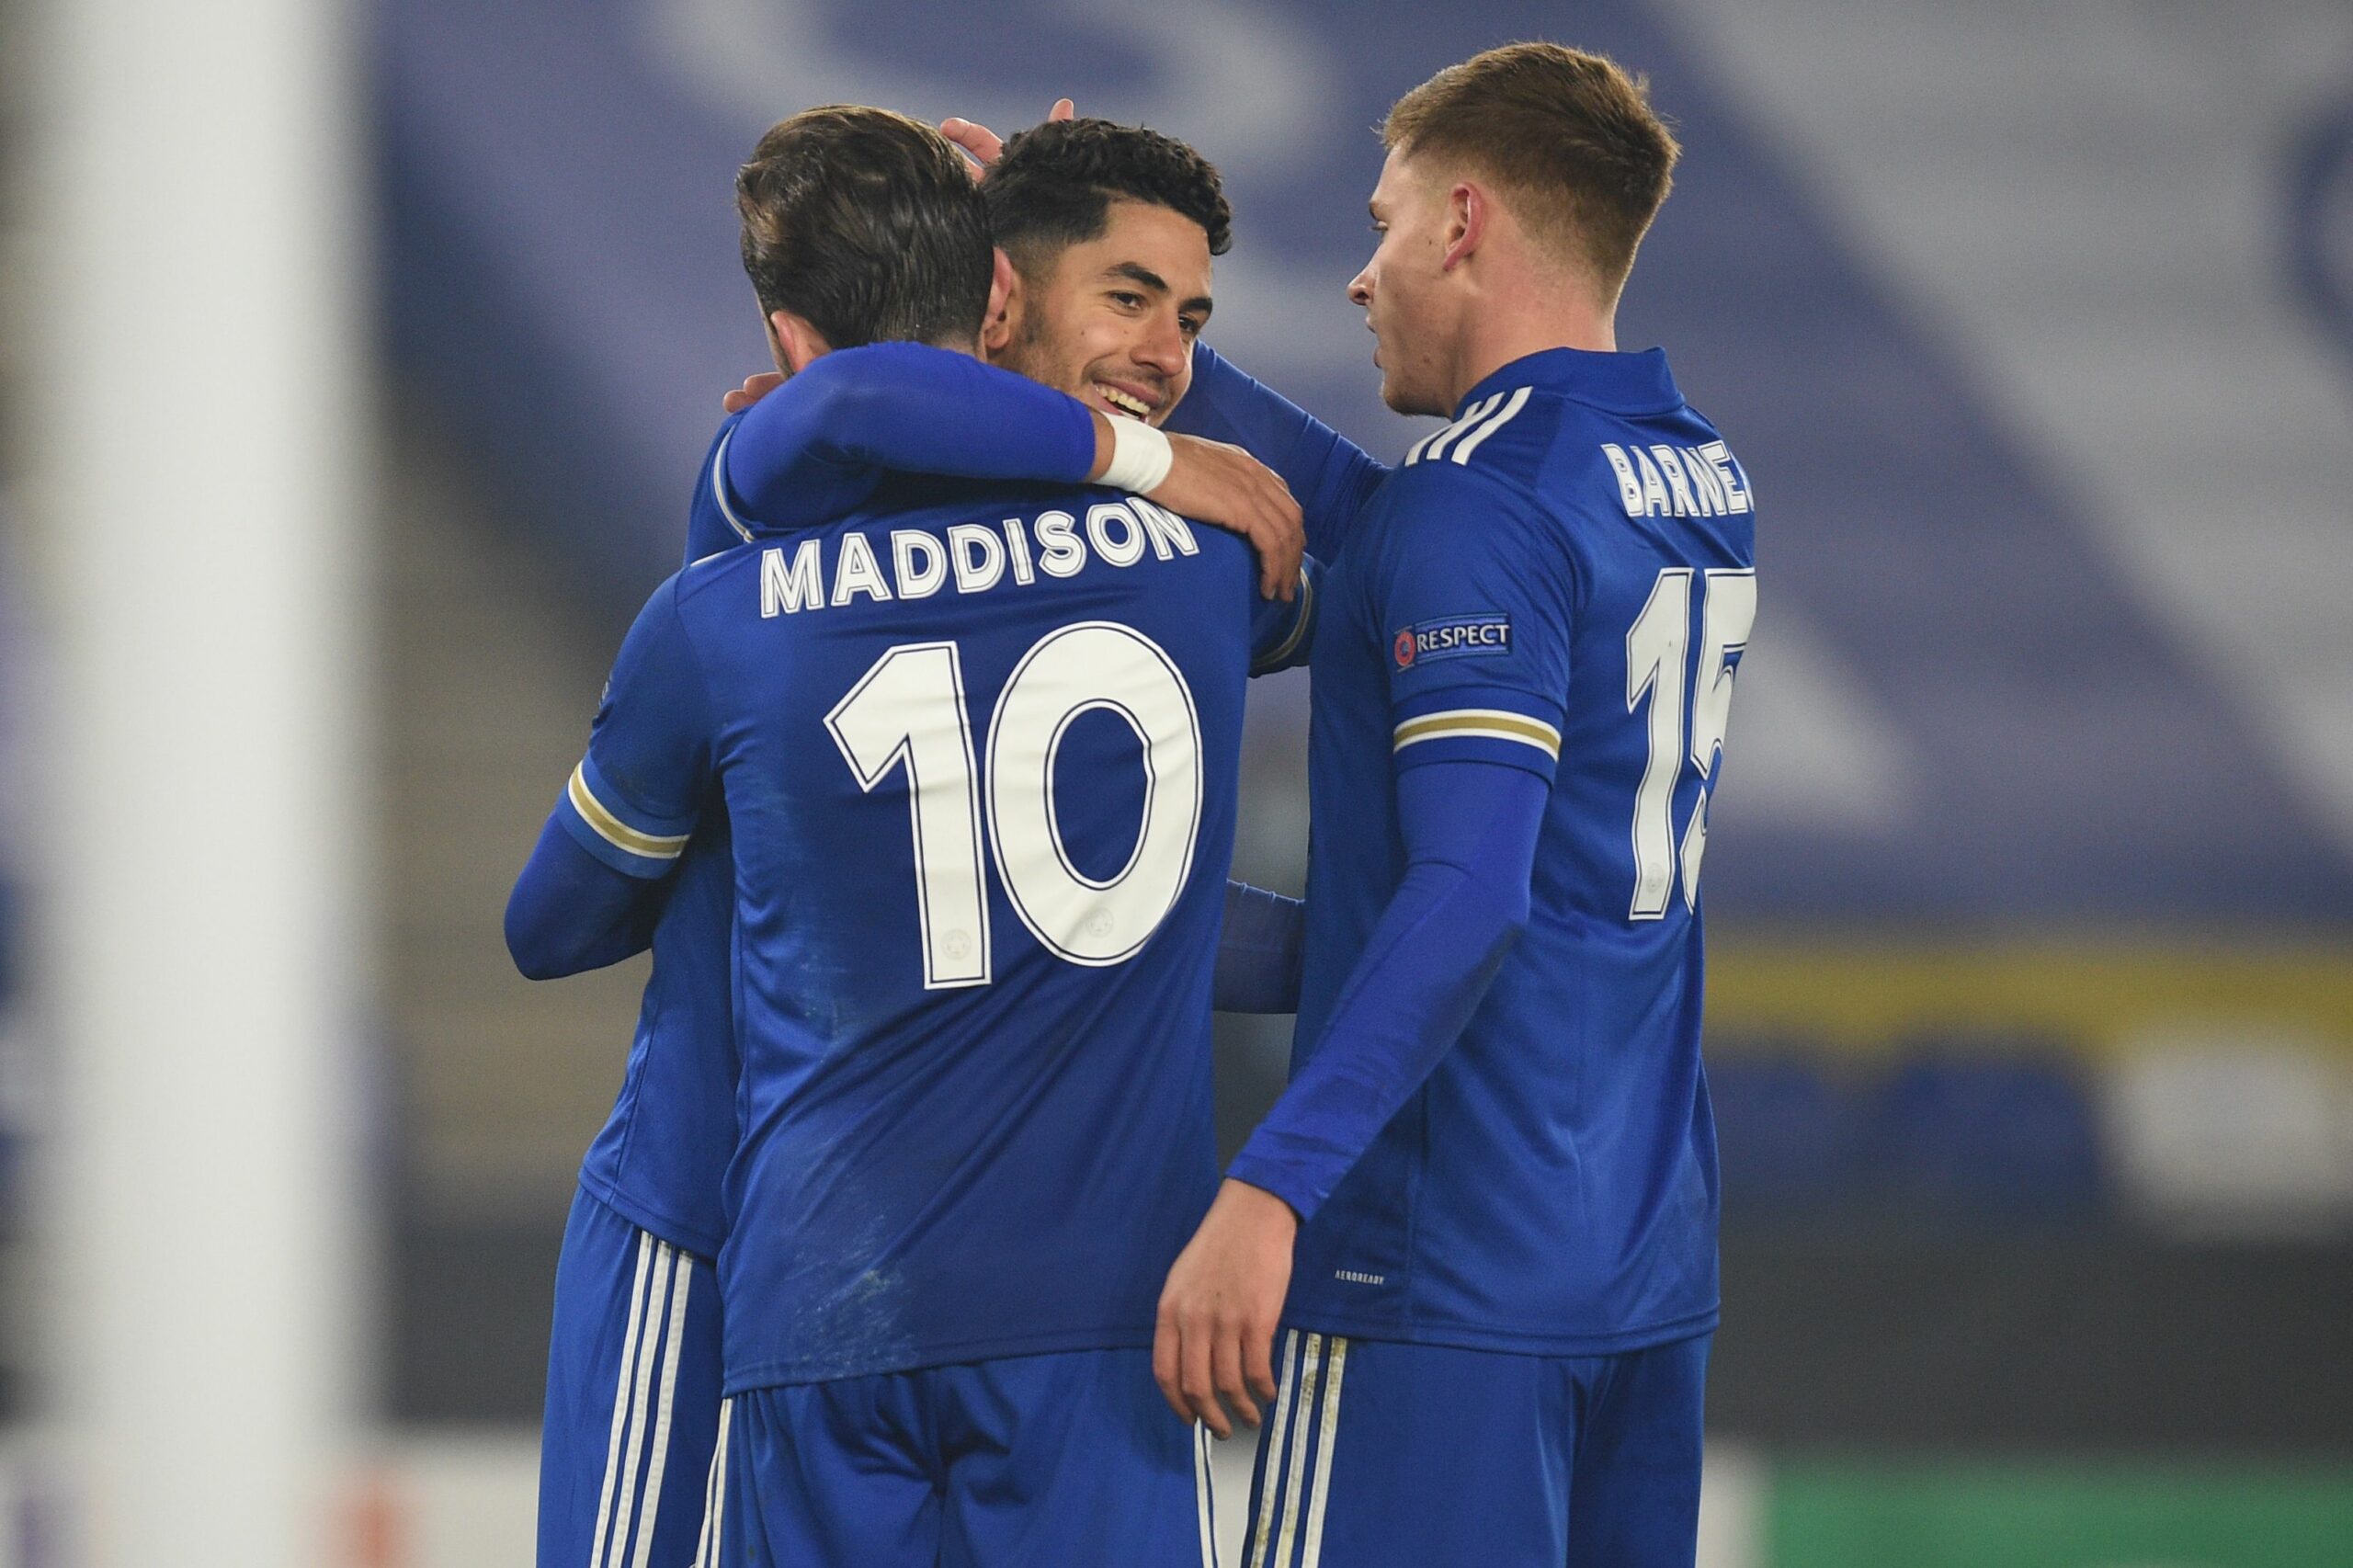 Everton empfängt Leicester im Kampf um Europa